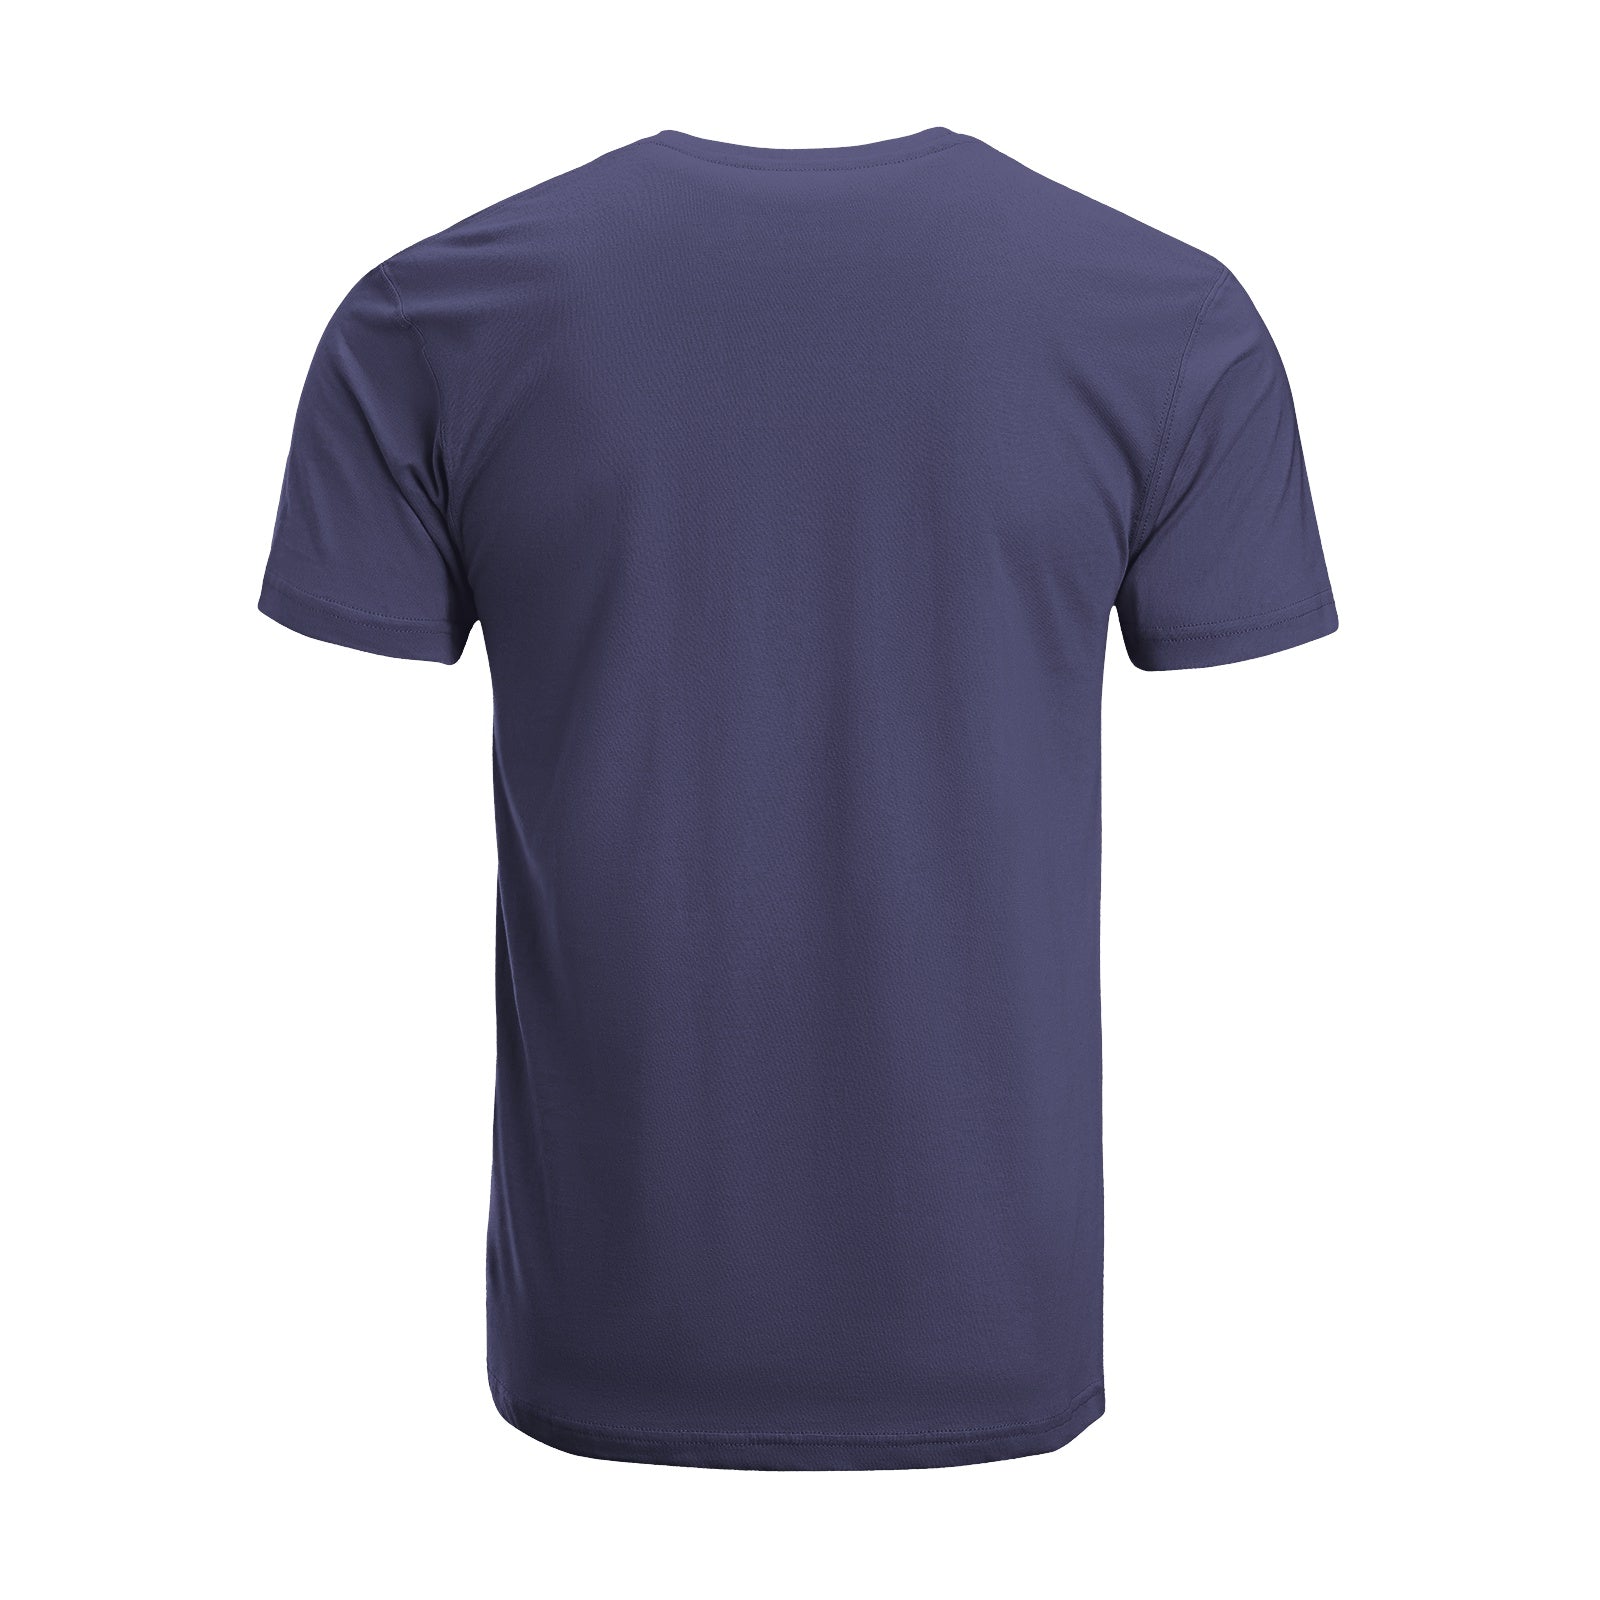 Unisex Short Sleeve Crew Neck Cotton Jersey T-Shirt Gym No. 19 - Tara-Outfits.com